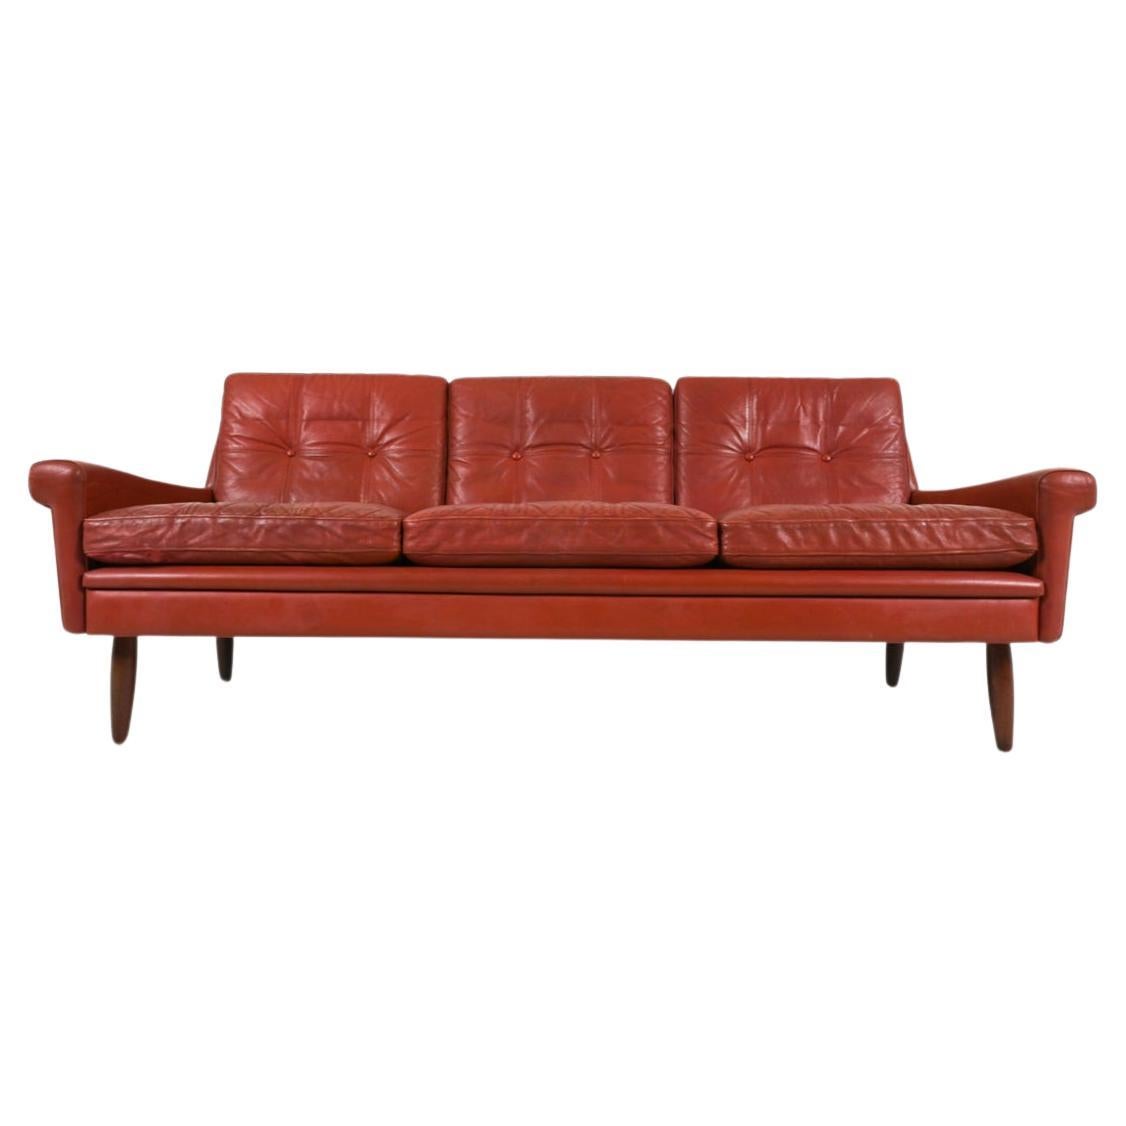 Mid century Danish modern red leather 3 seat sofa